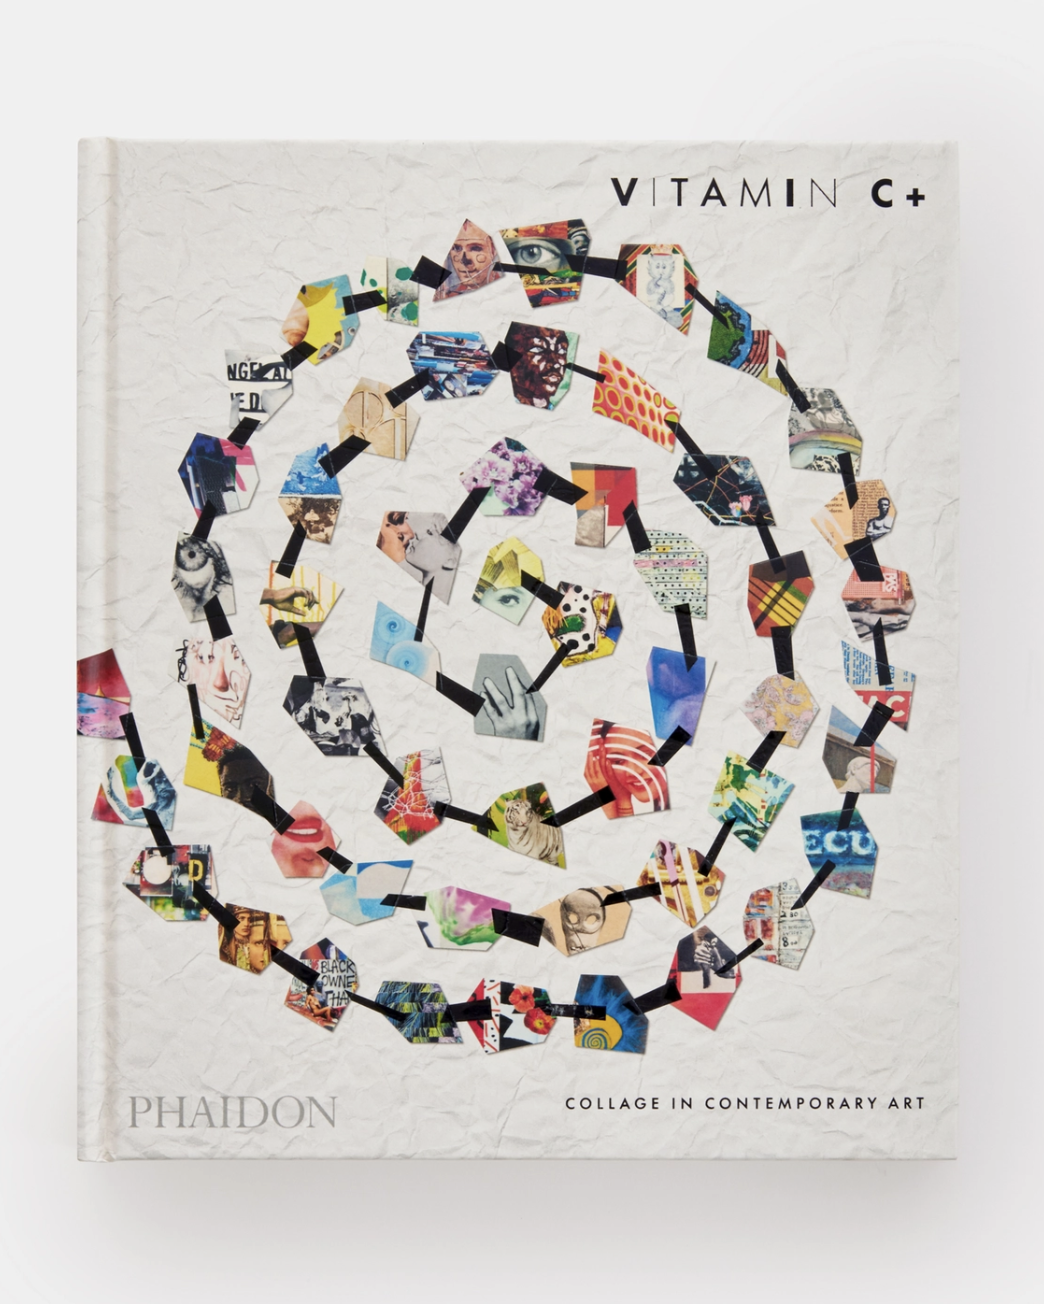 Etgar, Yuval. Vitamin C+: Collage in Contemporary Art. London: Phaidon Press